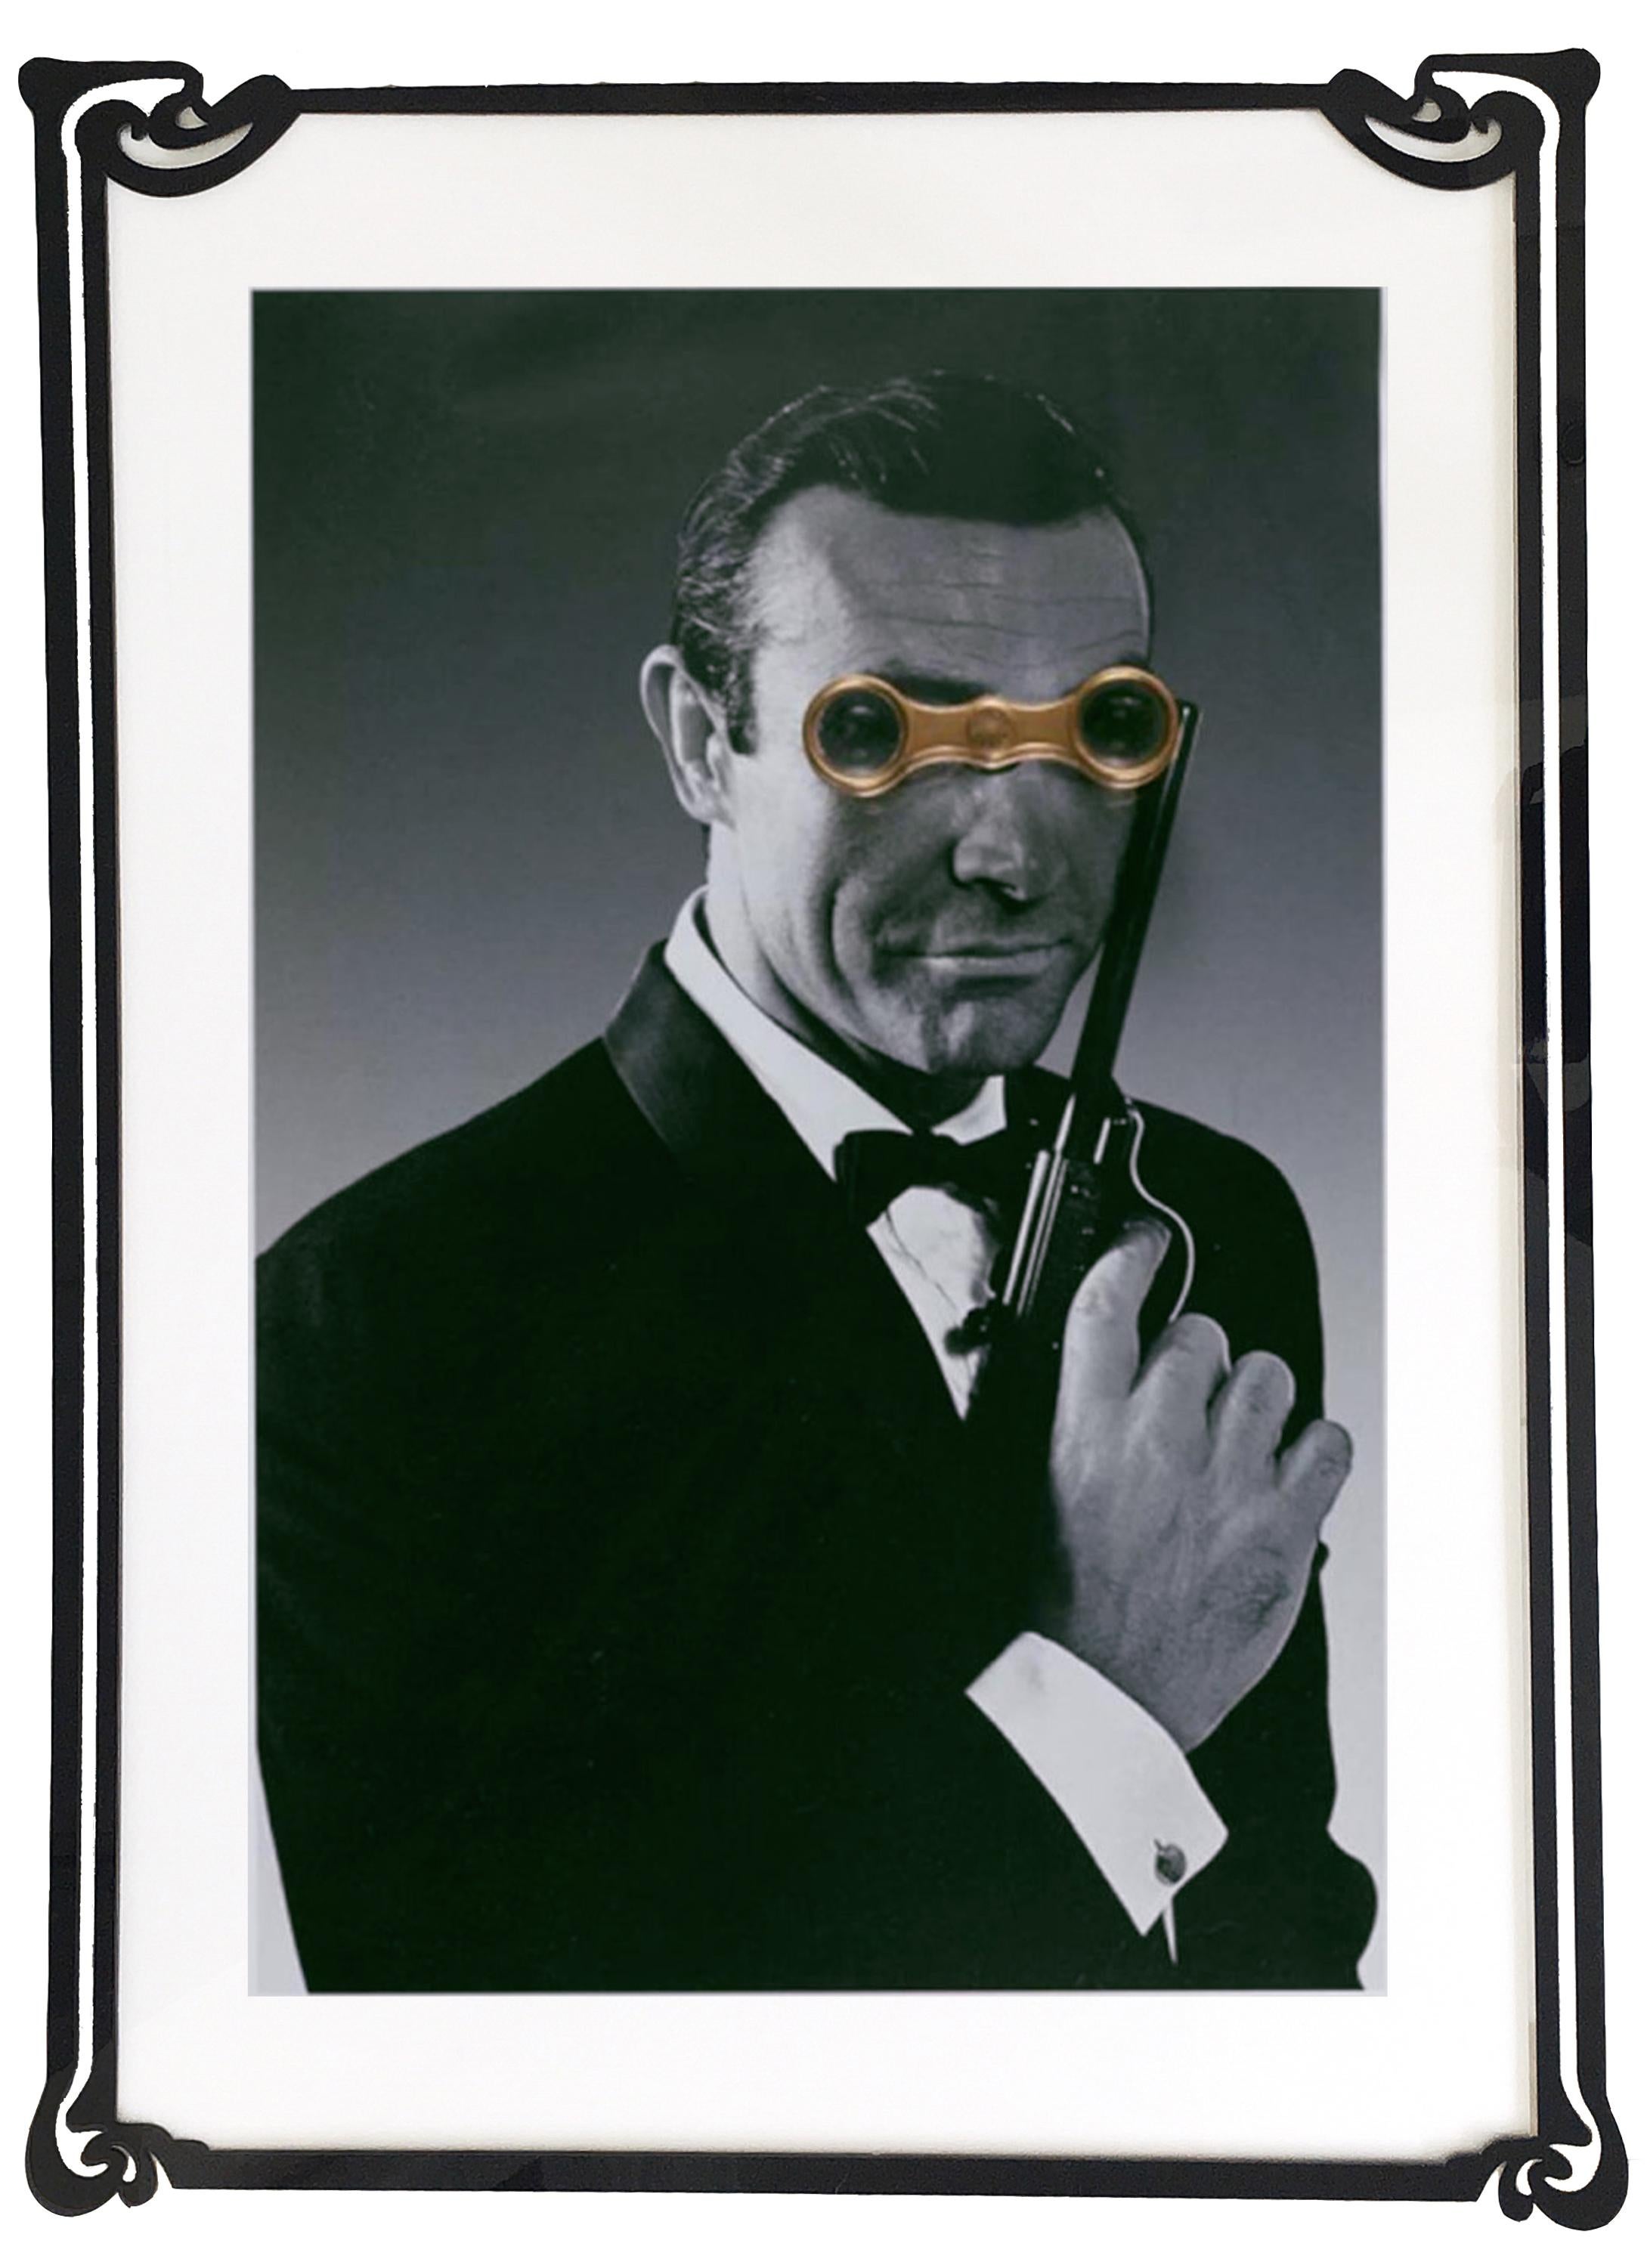 Paloma Castello Black and White Photograph –  James Bond, Castelloland, einzigartiger handgeschnitzter Rahmen, B & W-Fotografie